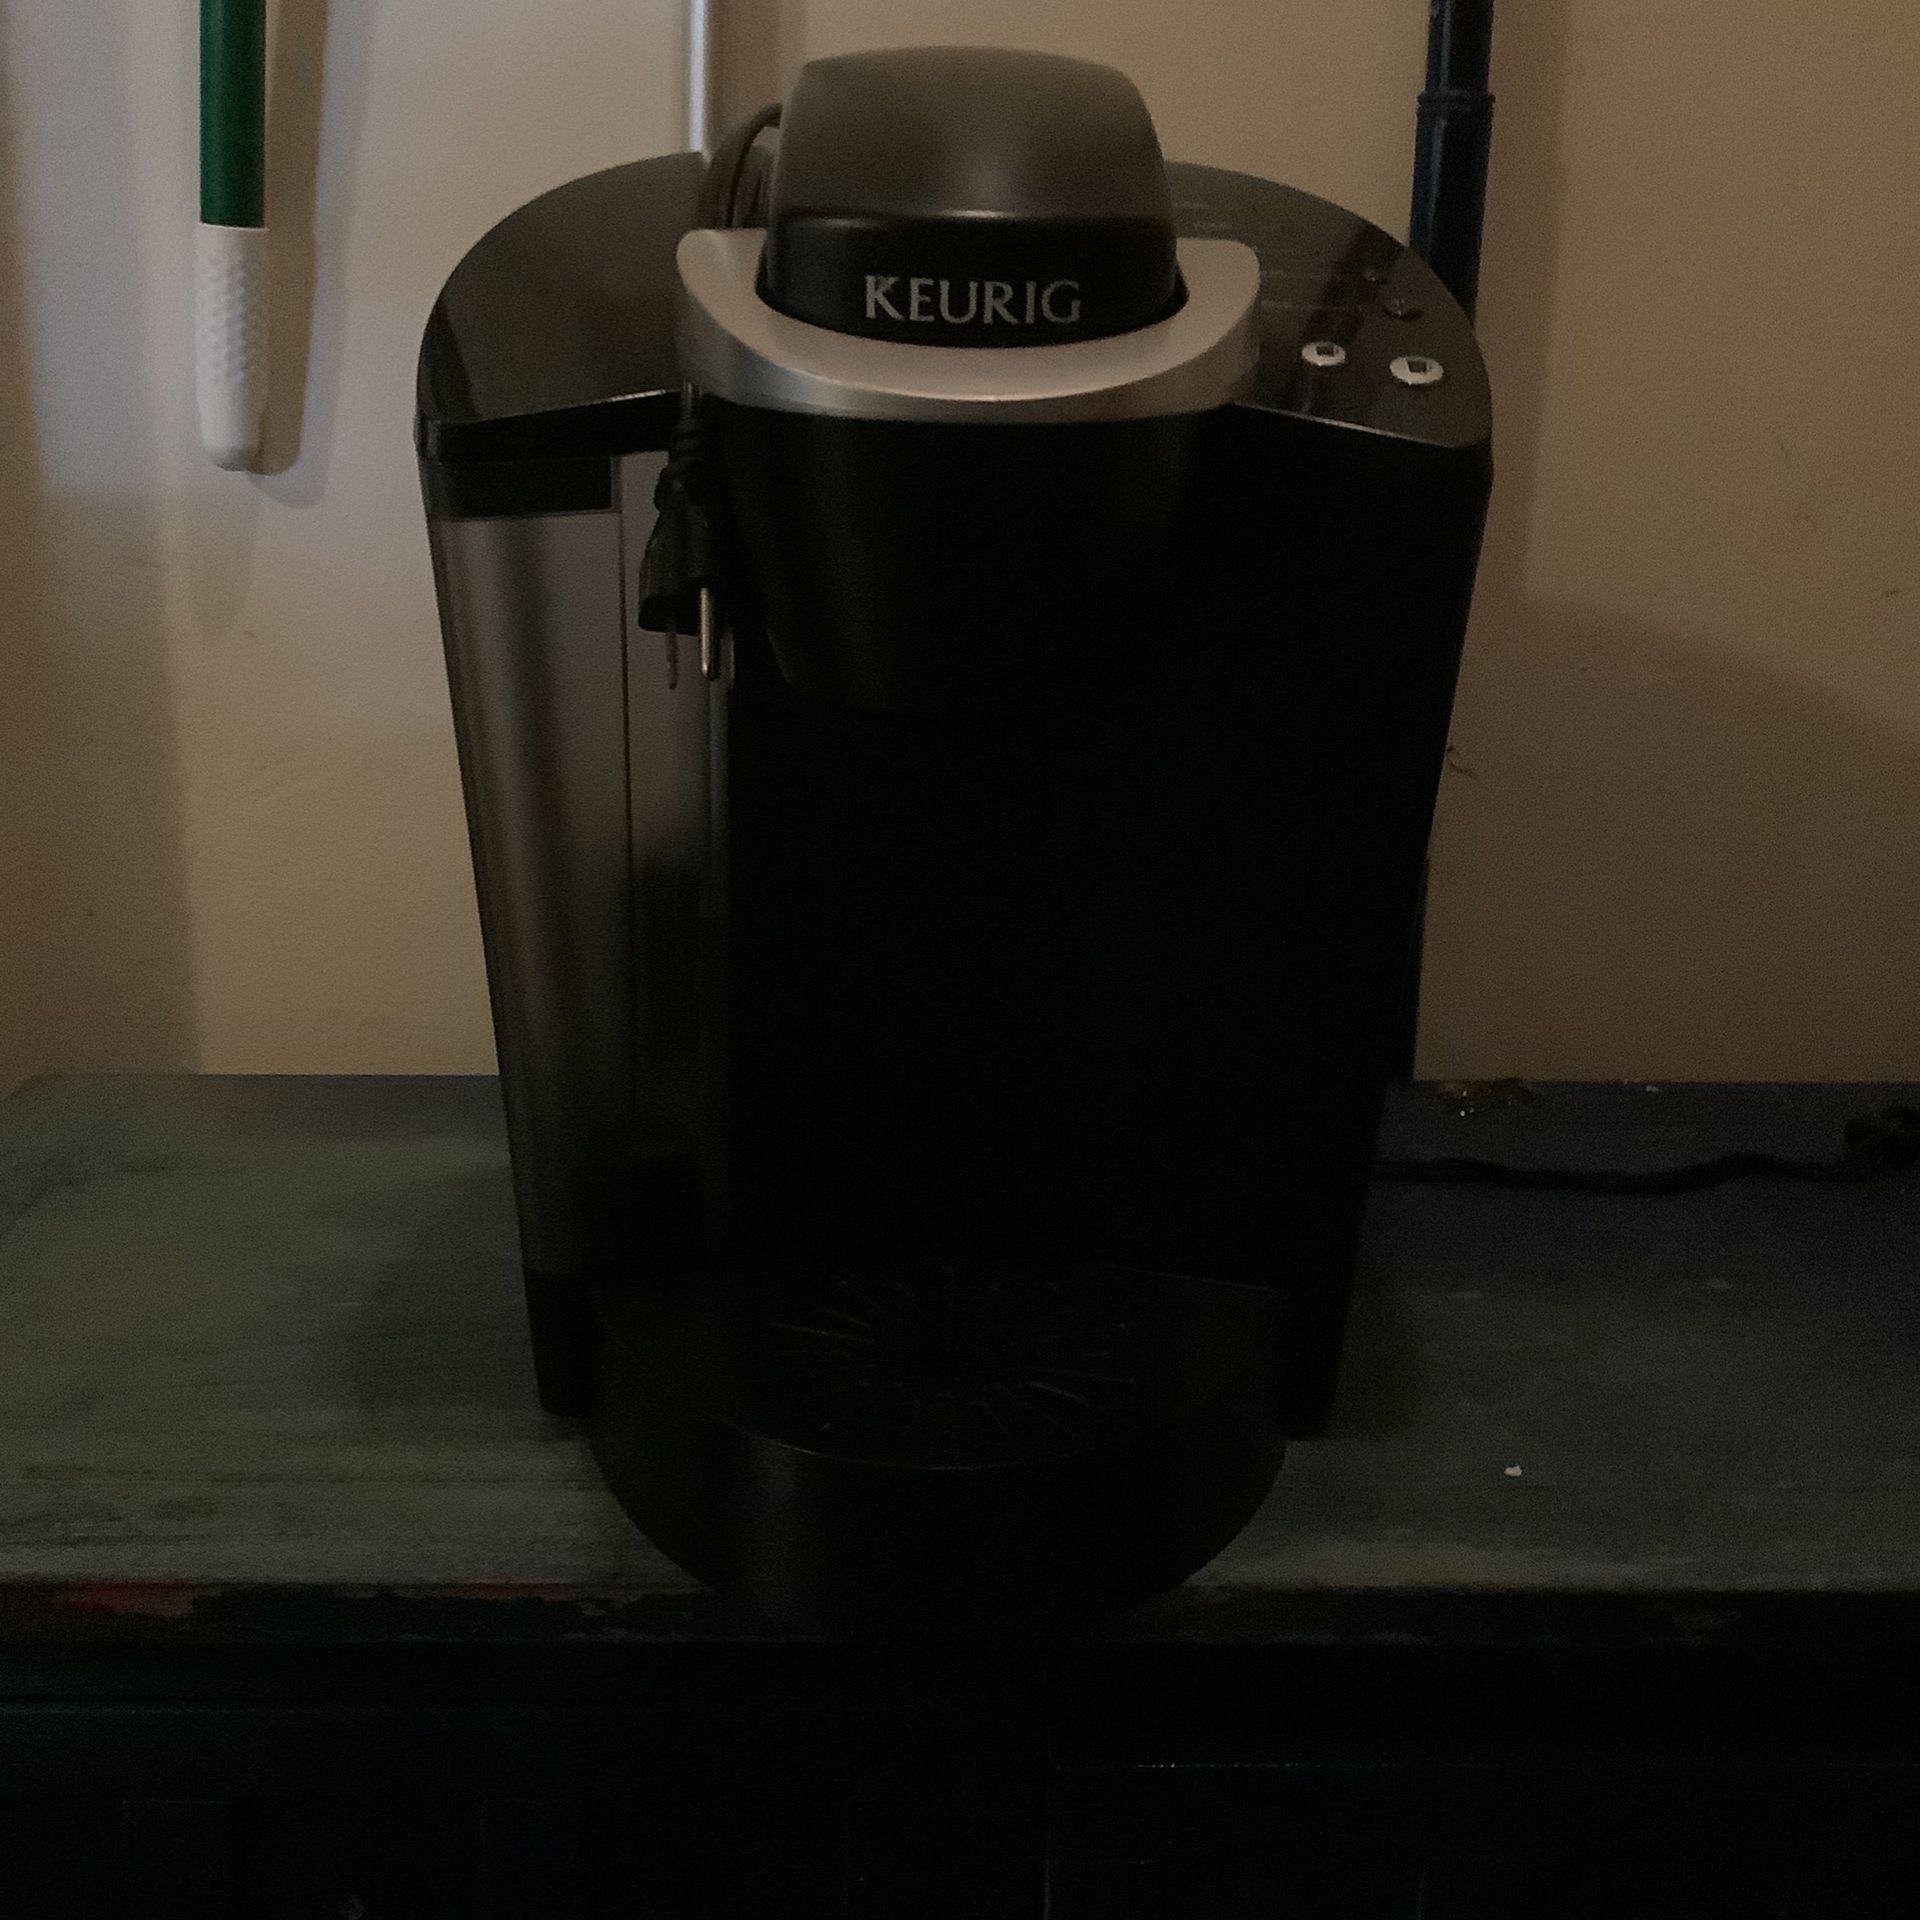 Keurig single cup brewing system, coffee maker, model, D 4120 V AC 68C 1500 watch